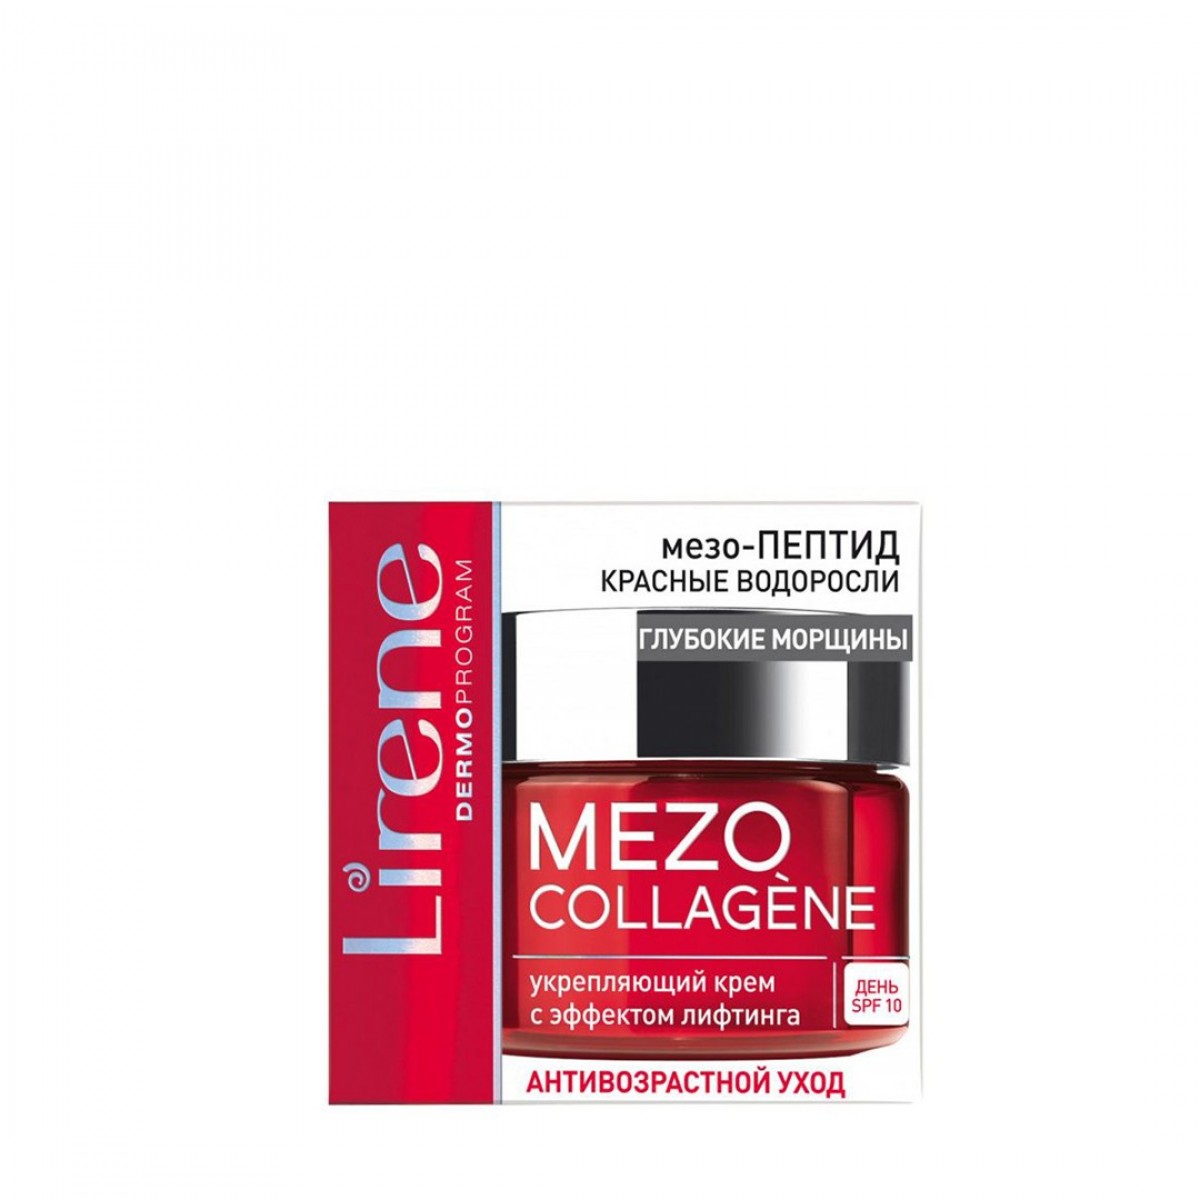 Mezo-collagene Day Cream